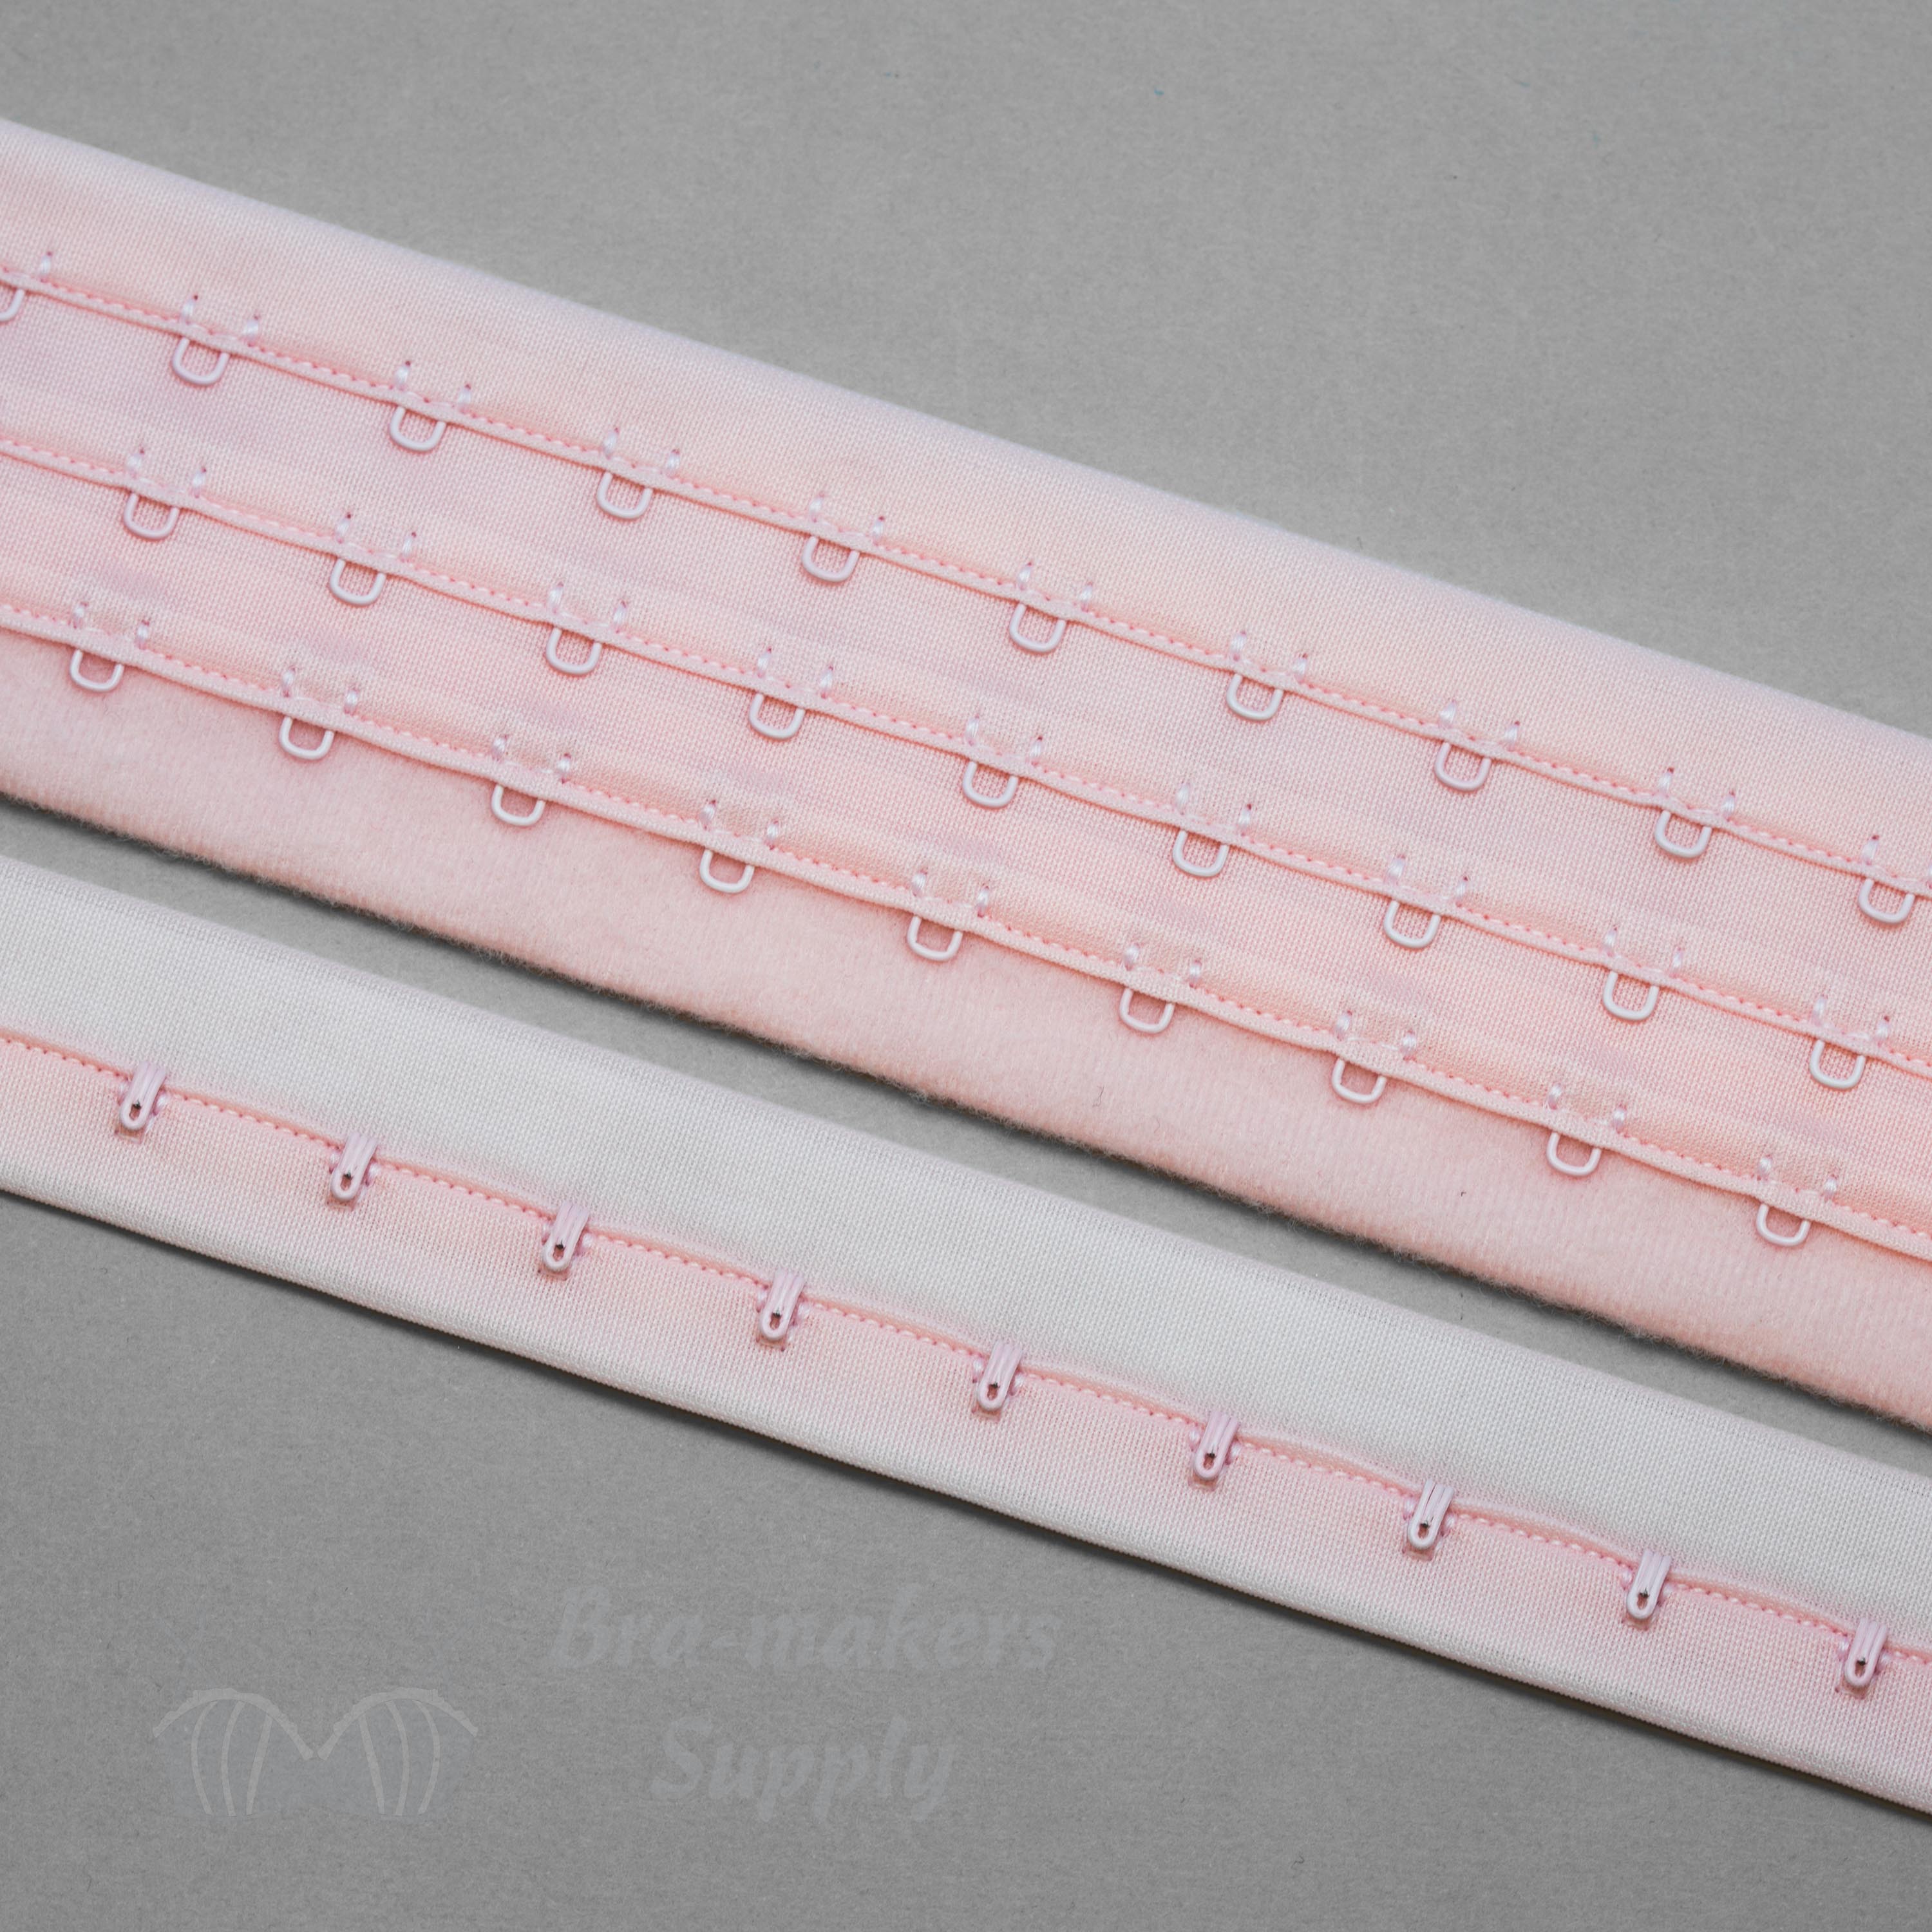 https://www.braandcorsetsupplies.com/wp-content/uploads/2016/10/nylon-hook-and-eye-tape-HE-53-pink-from-Bra-Makers-Supply-separate-shown.jpg